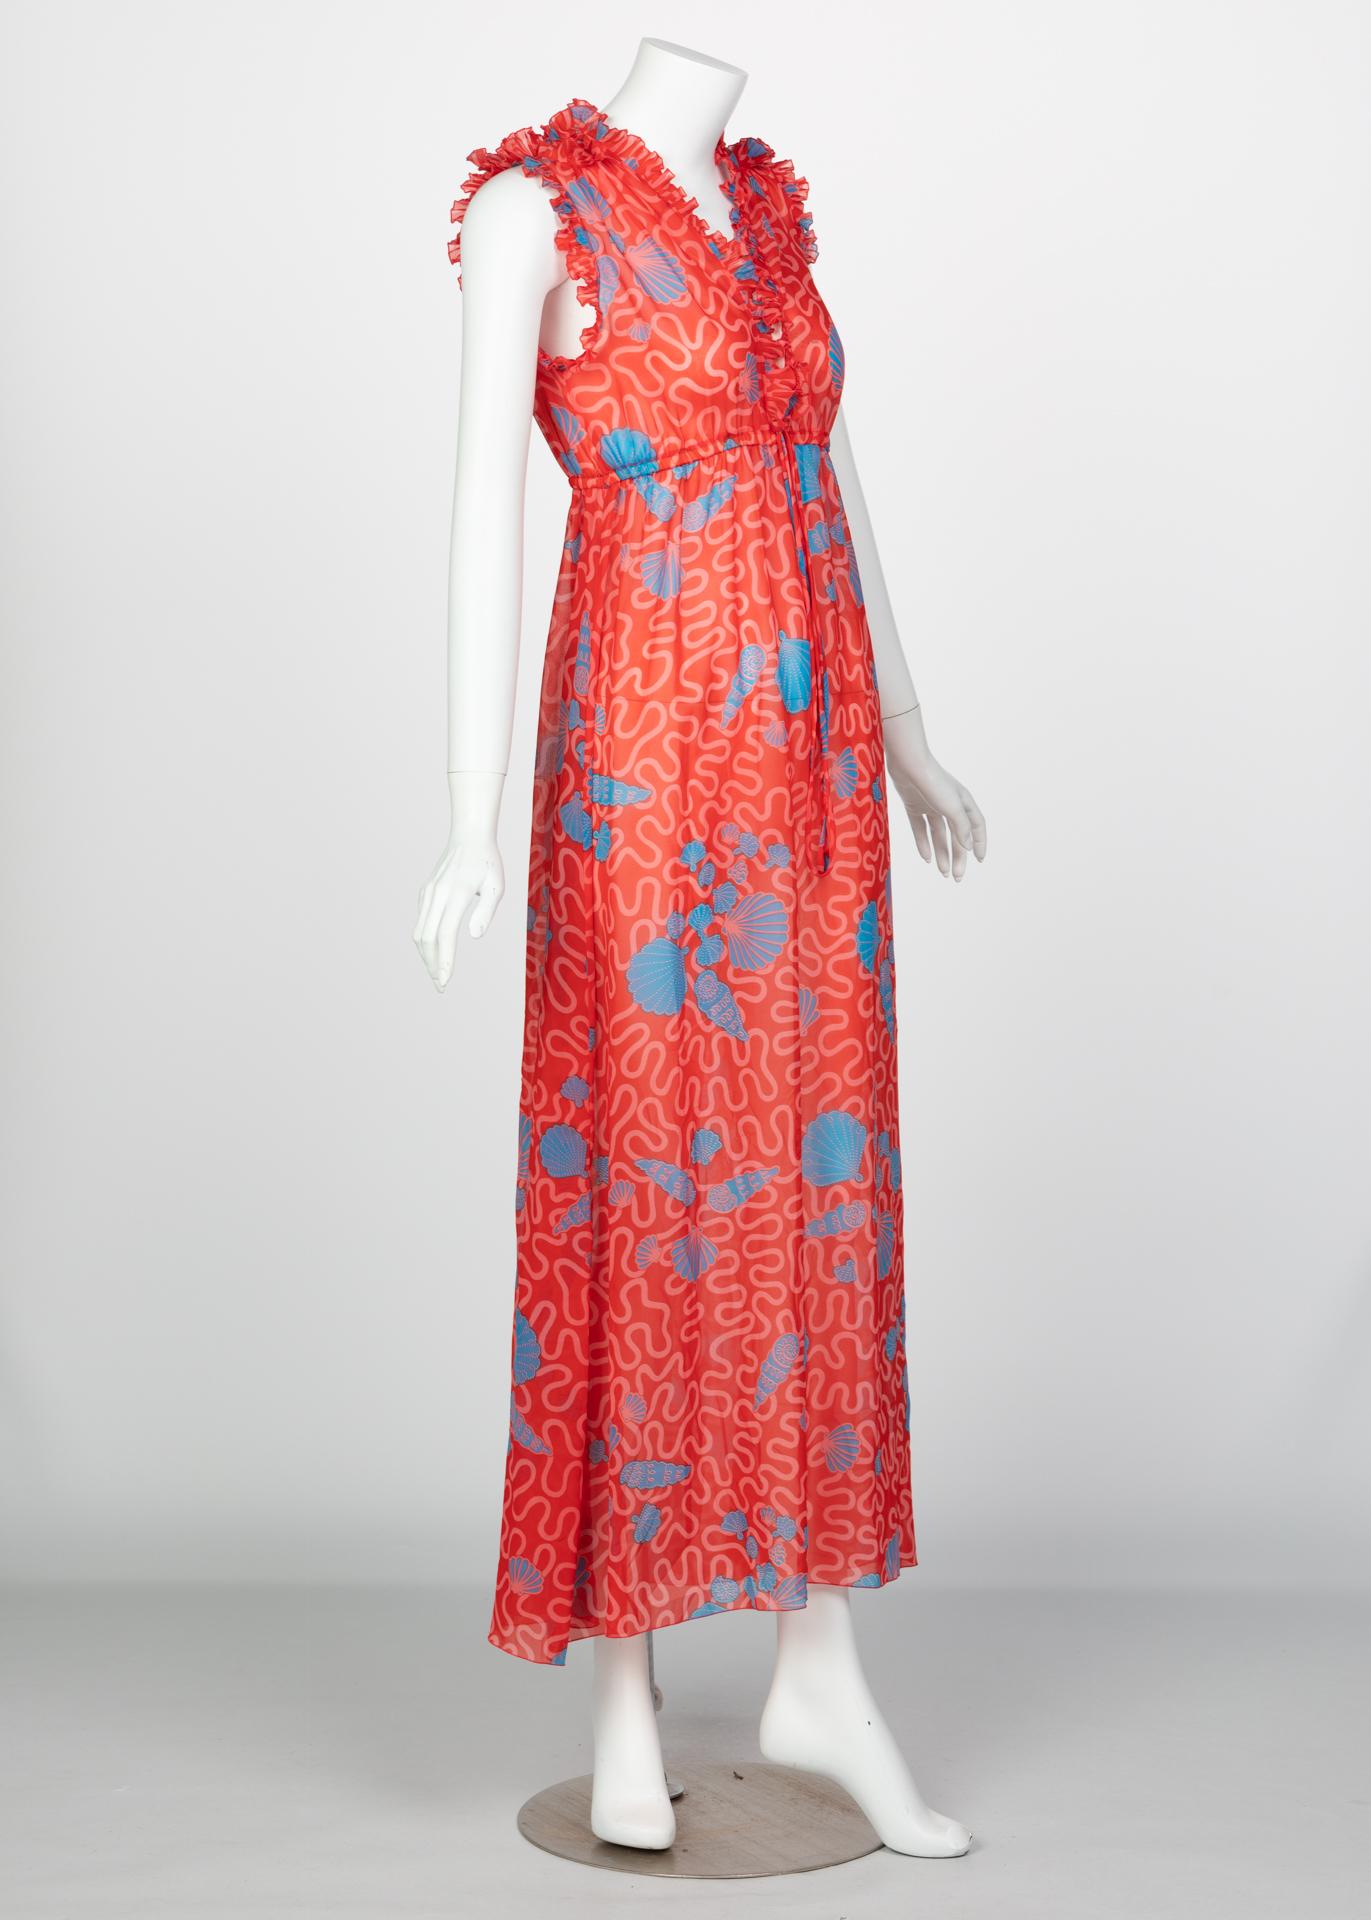 Zandra Rhodes Red Pleated Shell print Caftan and Sleeveless Dress Set, 1970s 4